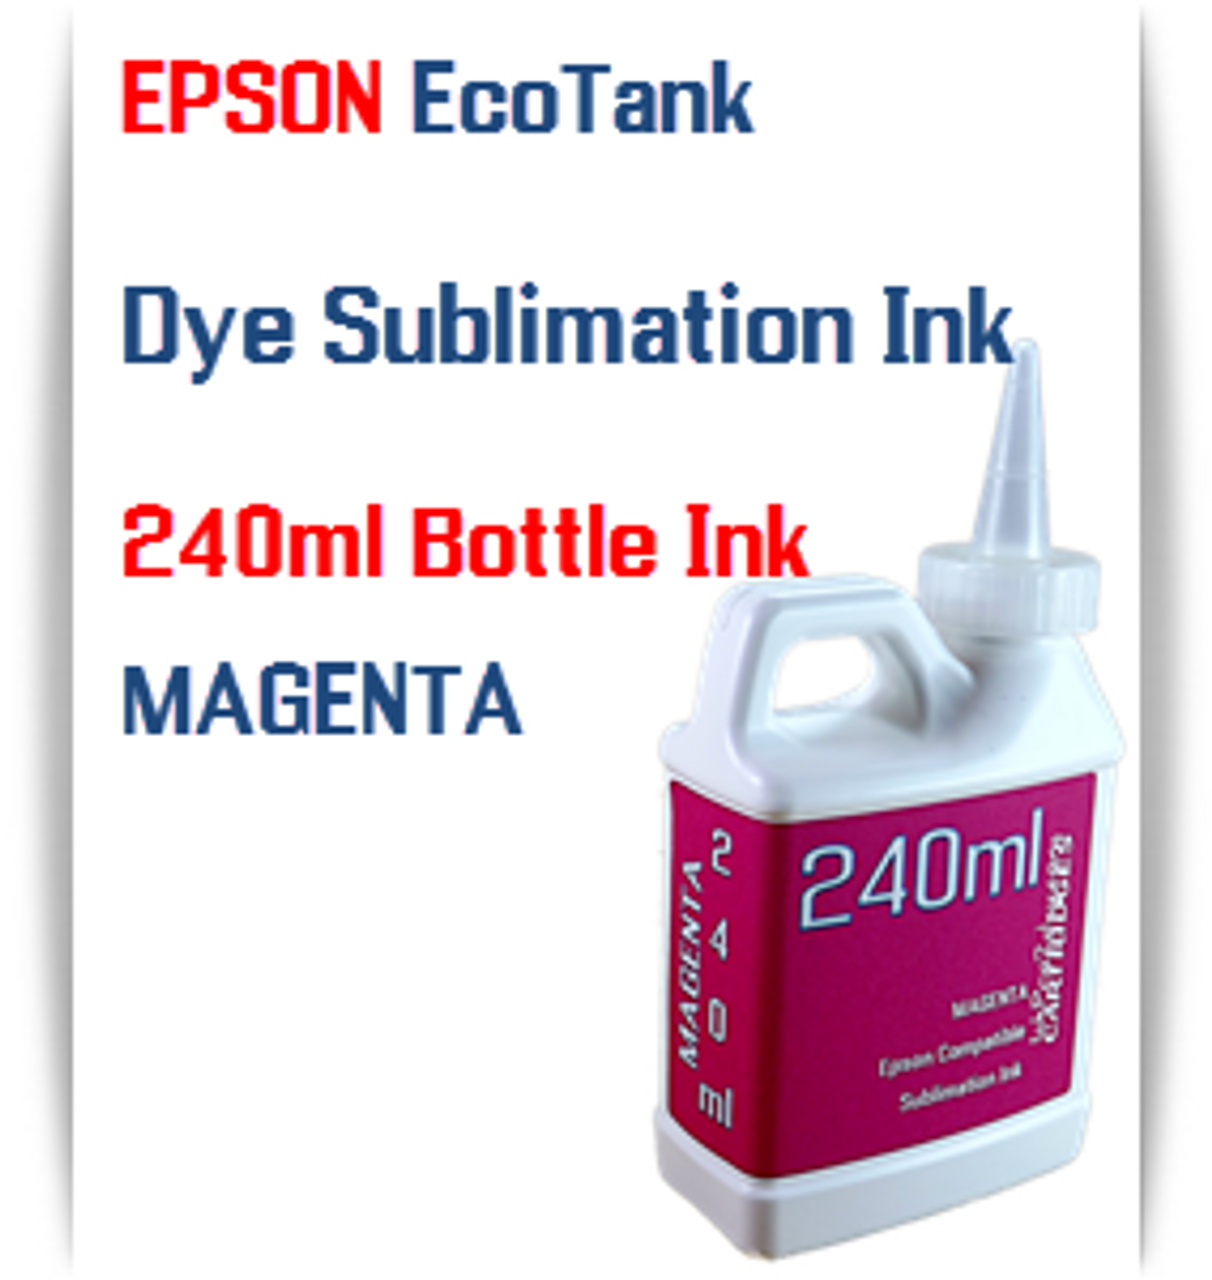 Magenta EPSON EcoTank printer Dye Sublimation Ink 240ml bottles